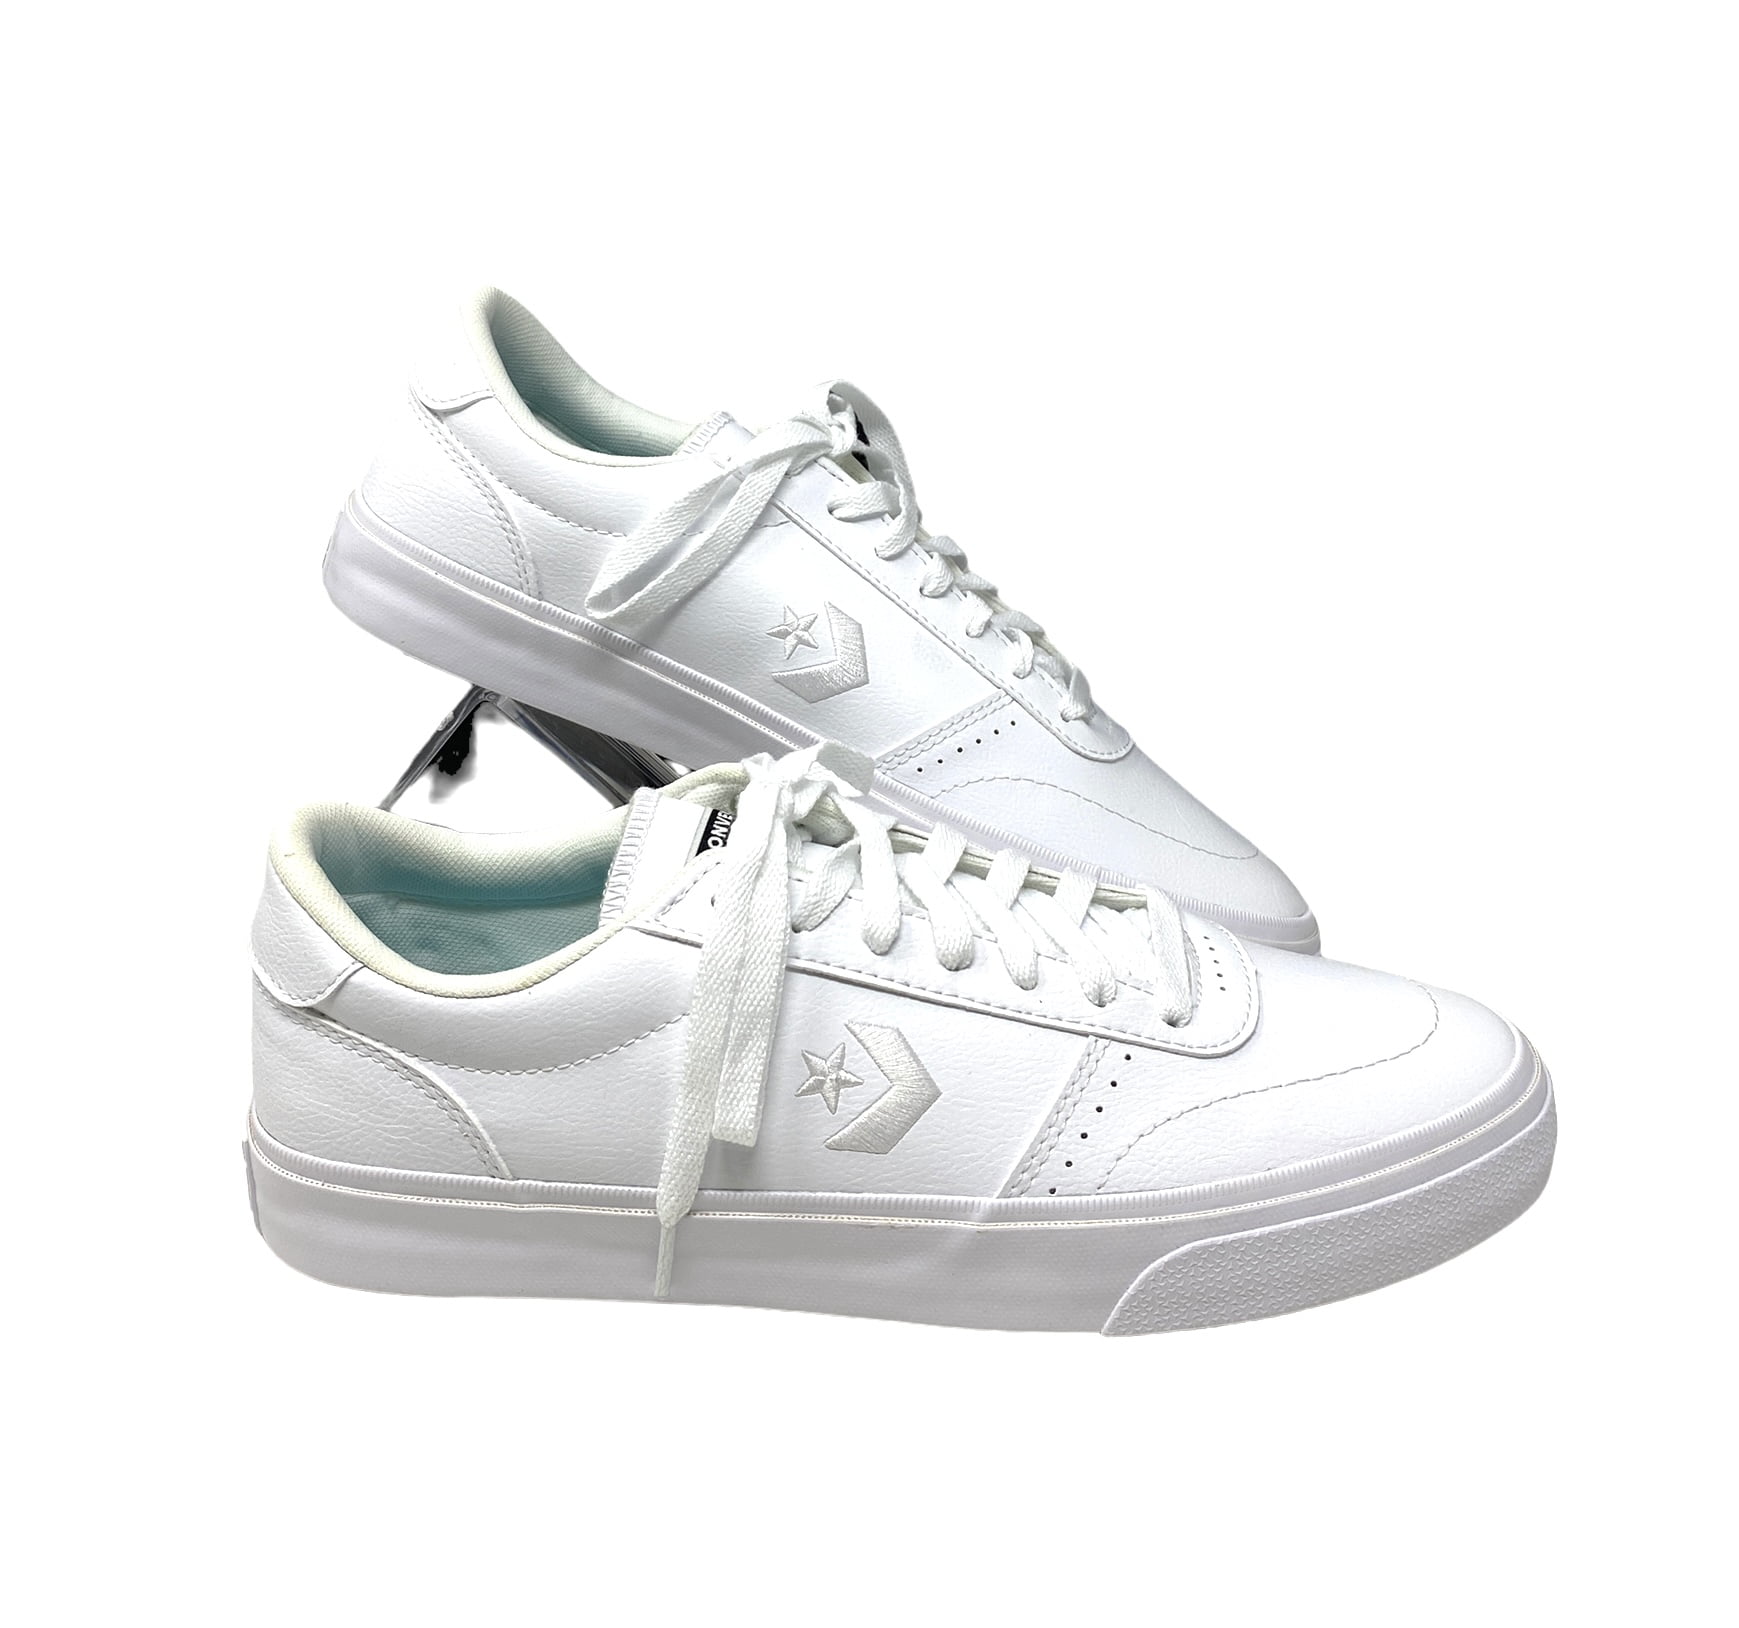 Converse Boulevard OX Low Top White Men's Leather Sneakers Size 170428C - Walmart.com